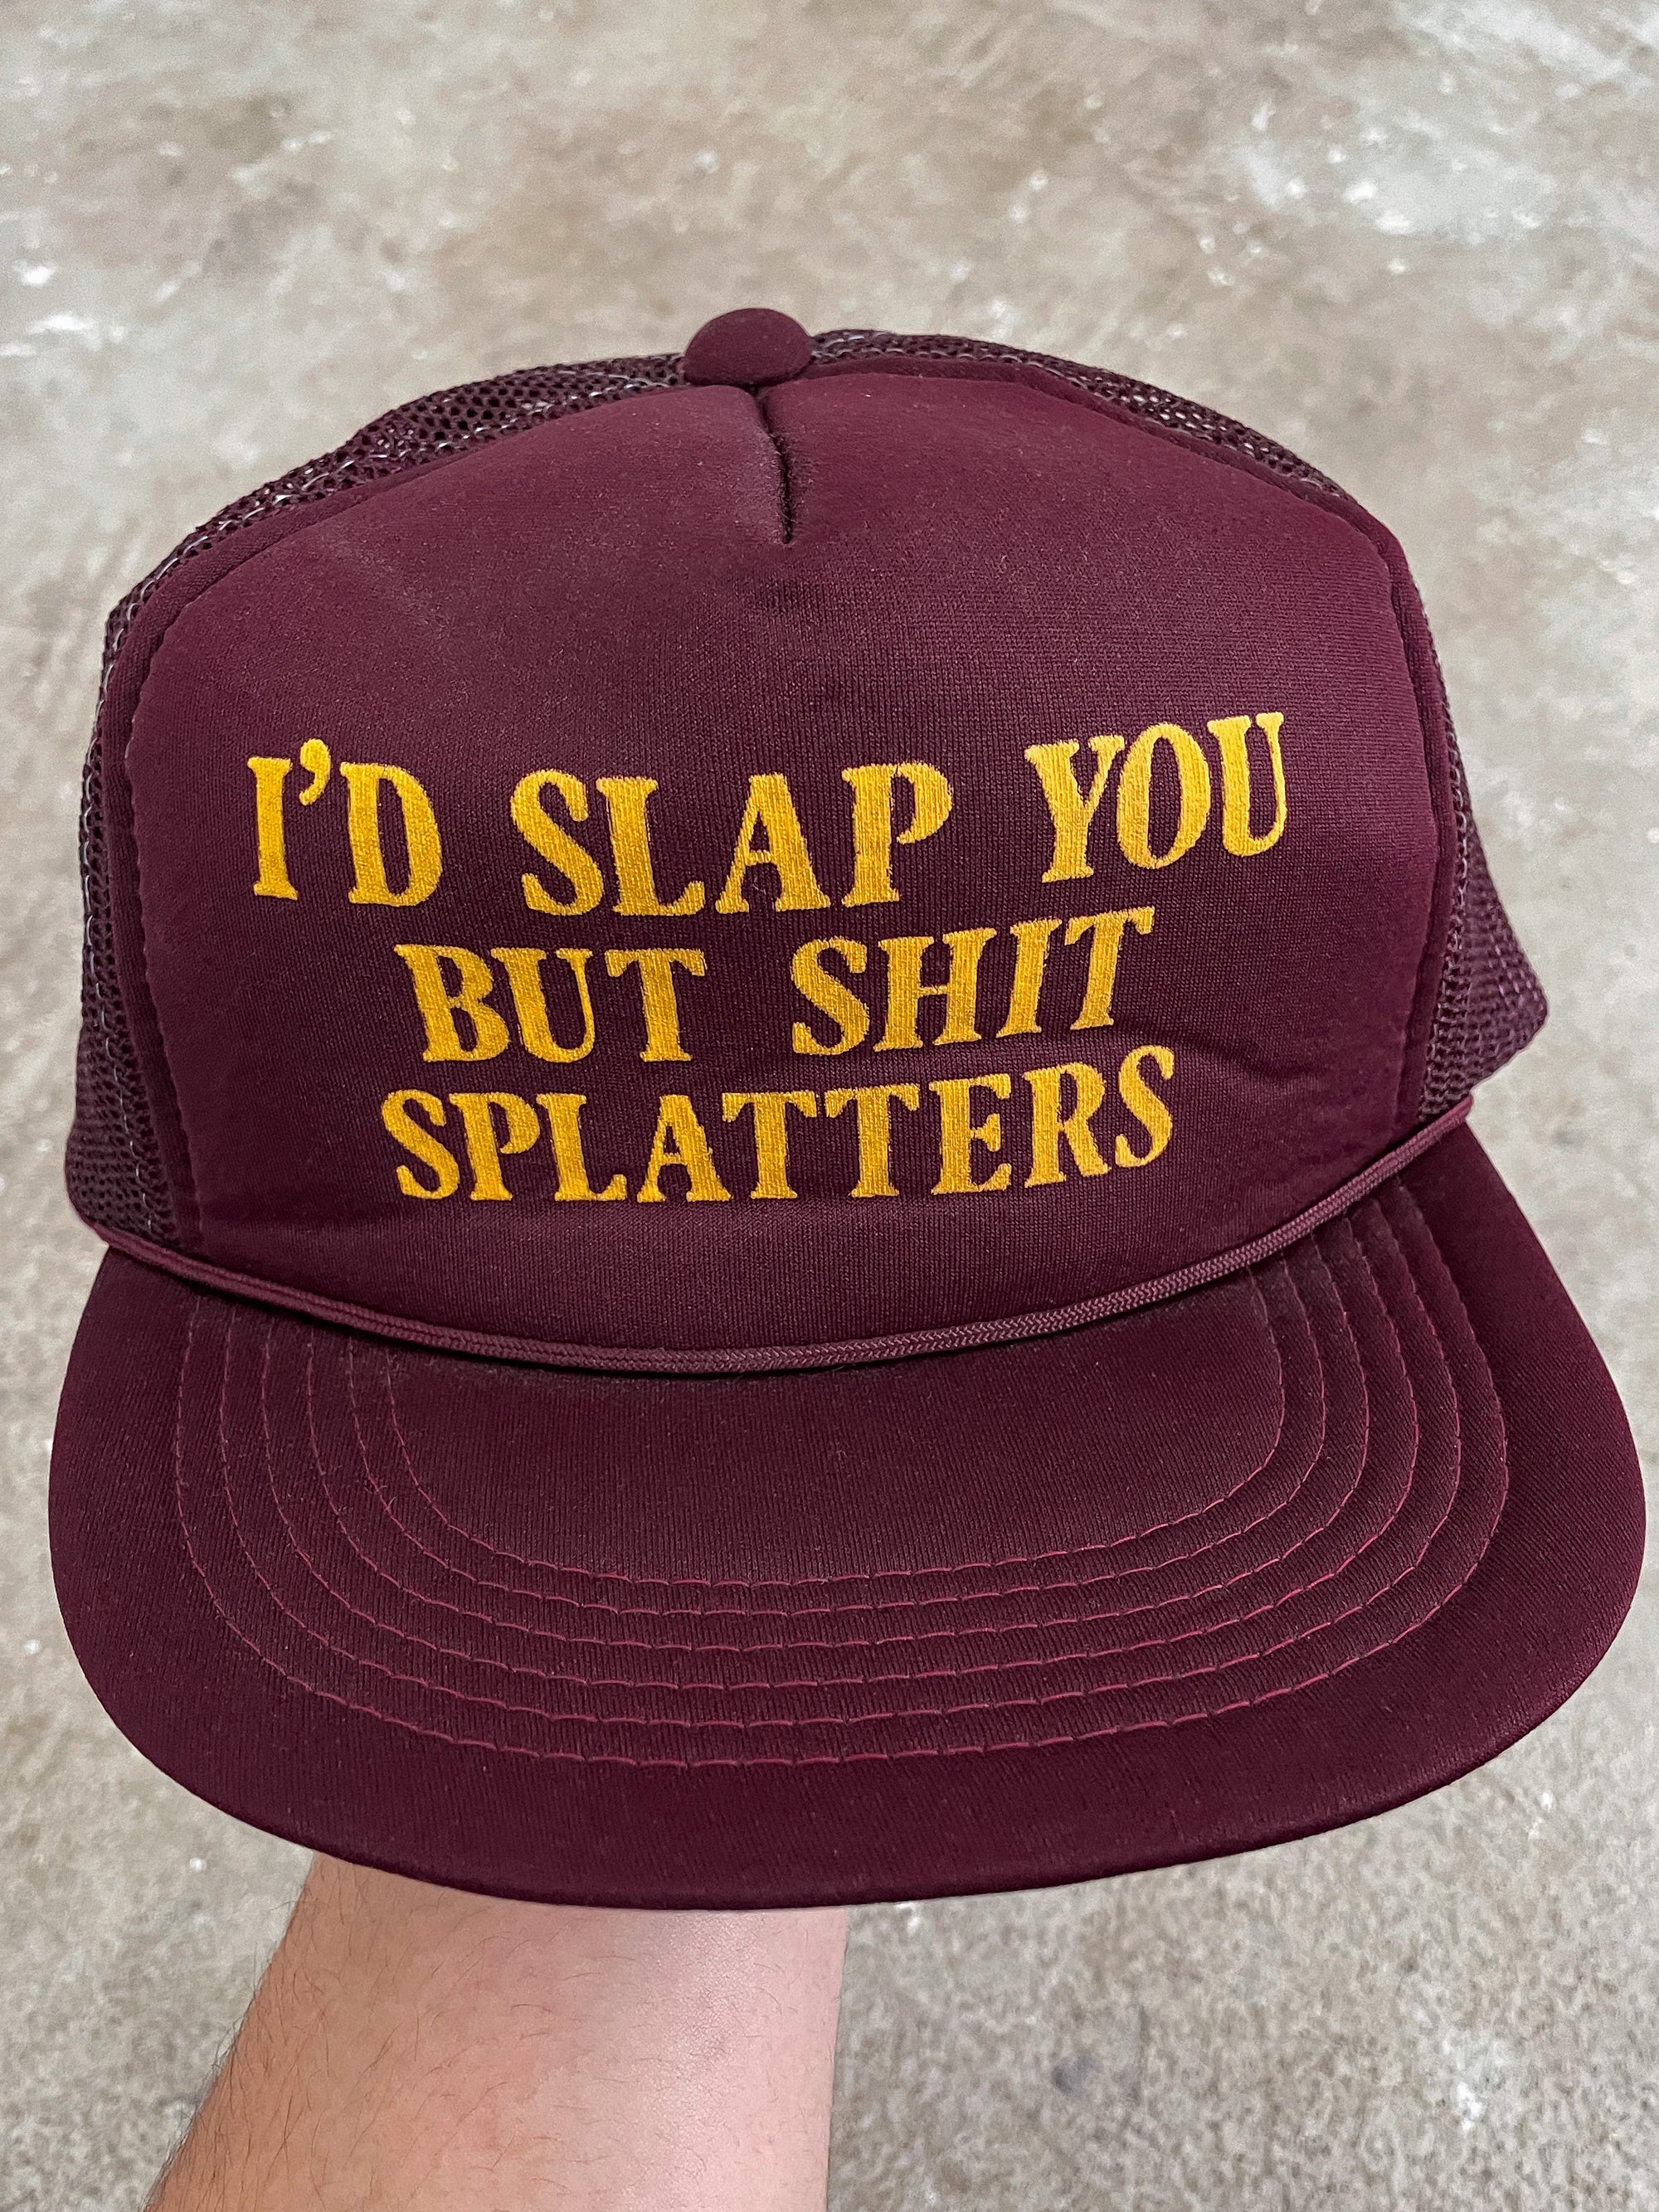 1990s “I’d Slap You But Shit Splatters” Trucker Hat